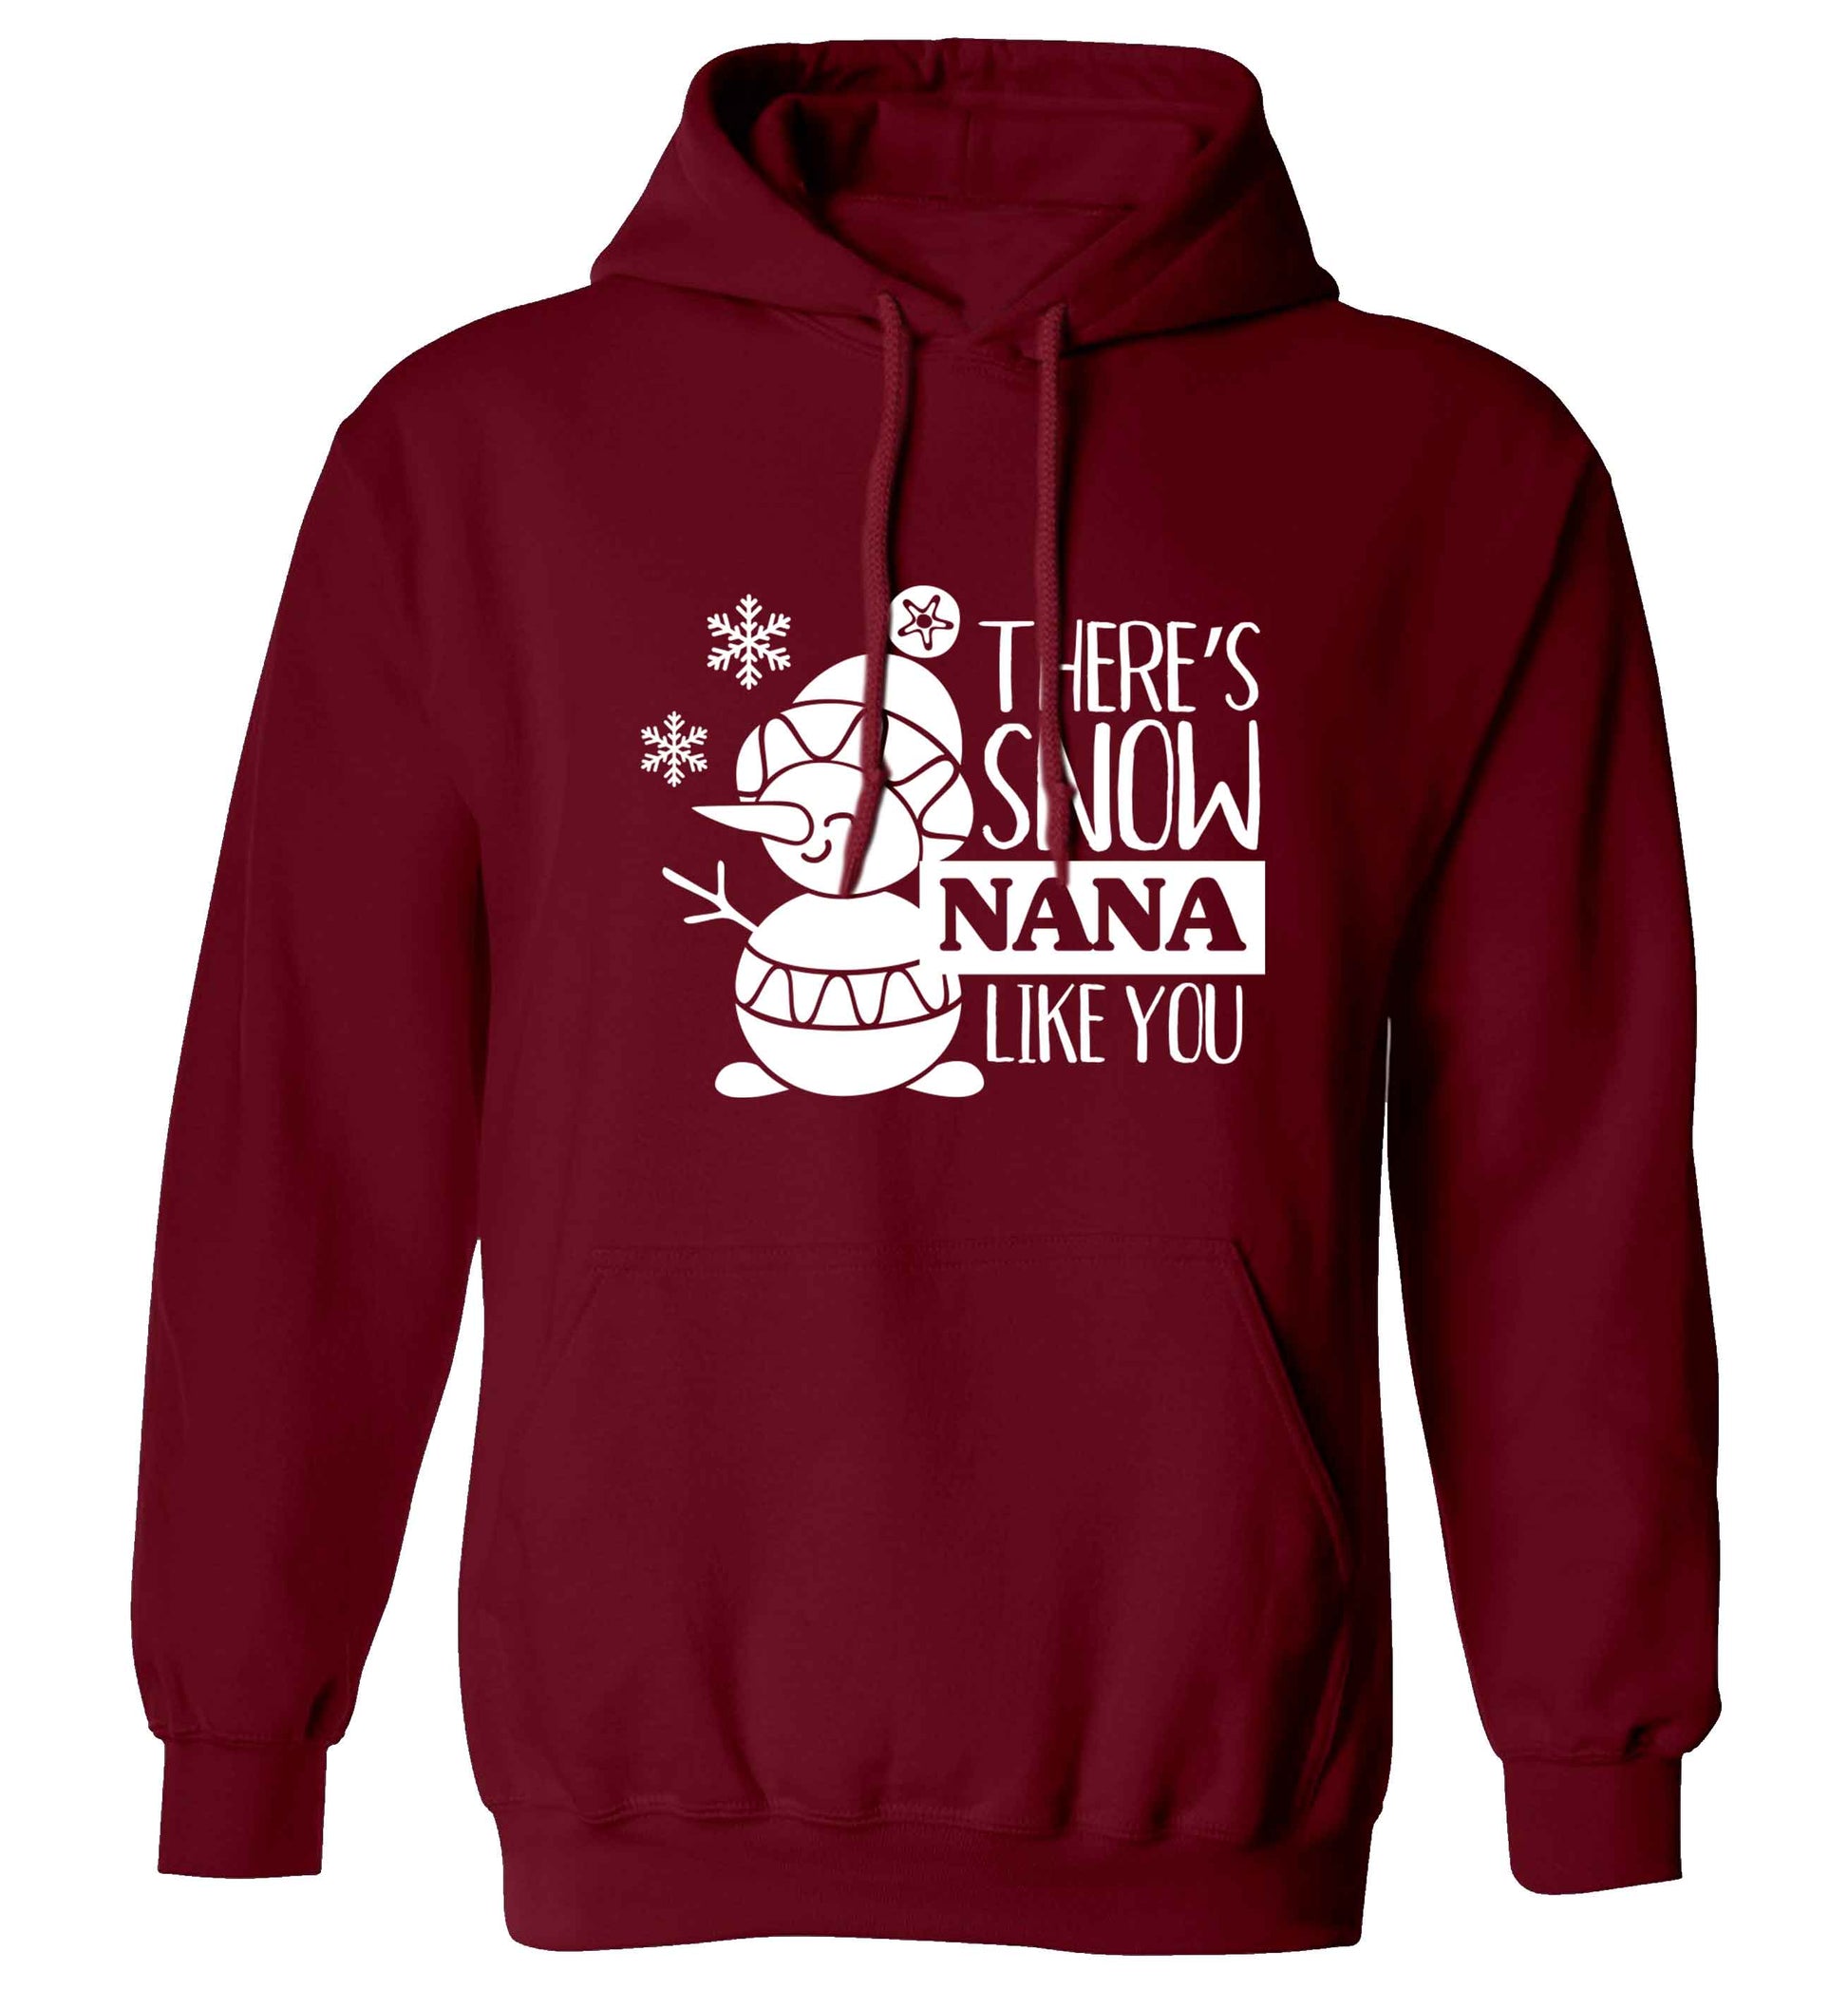 There's snow nana like you adults unisex maroon hoodie 2XL